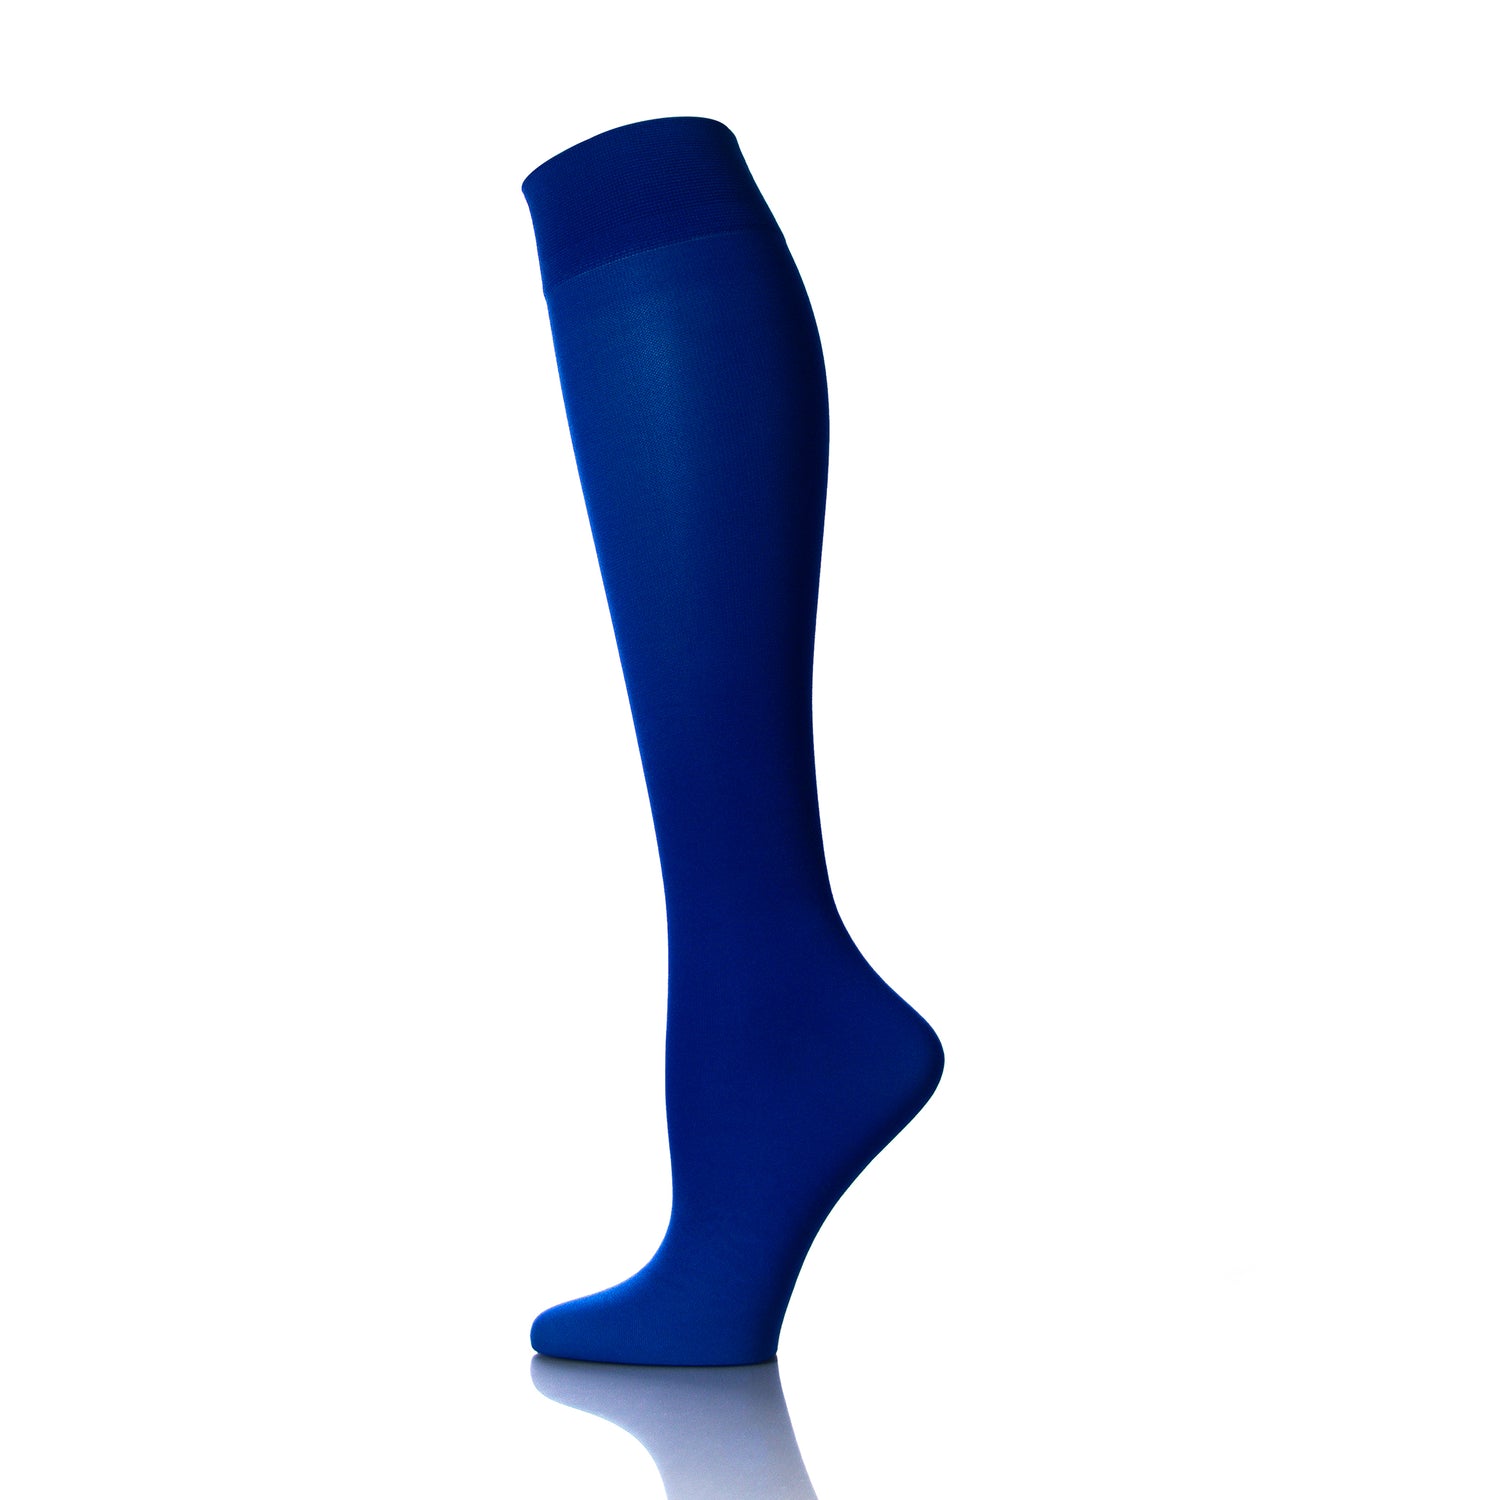 Womens Support Socks - Royal Blue - Doctor Brace Softmedi - Side View